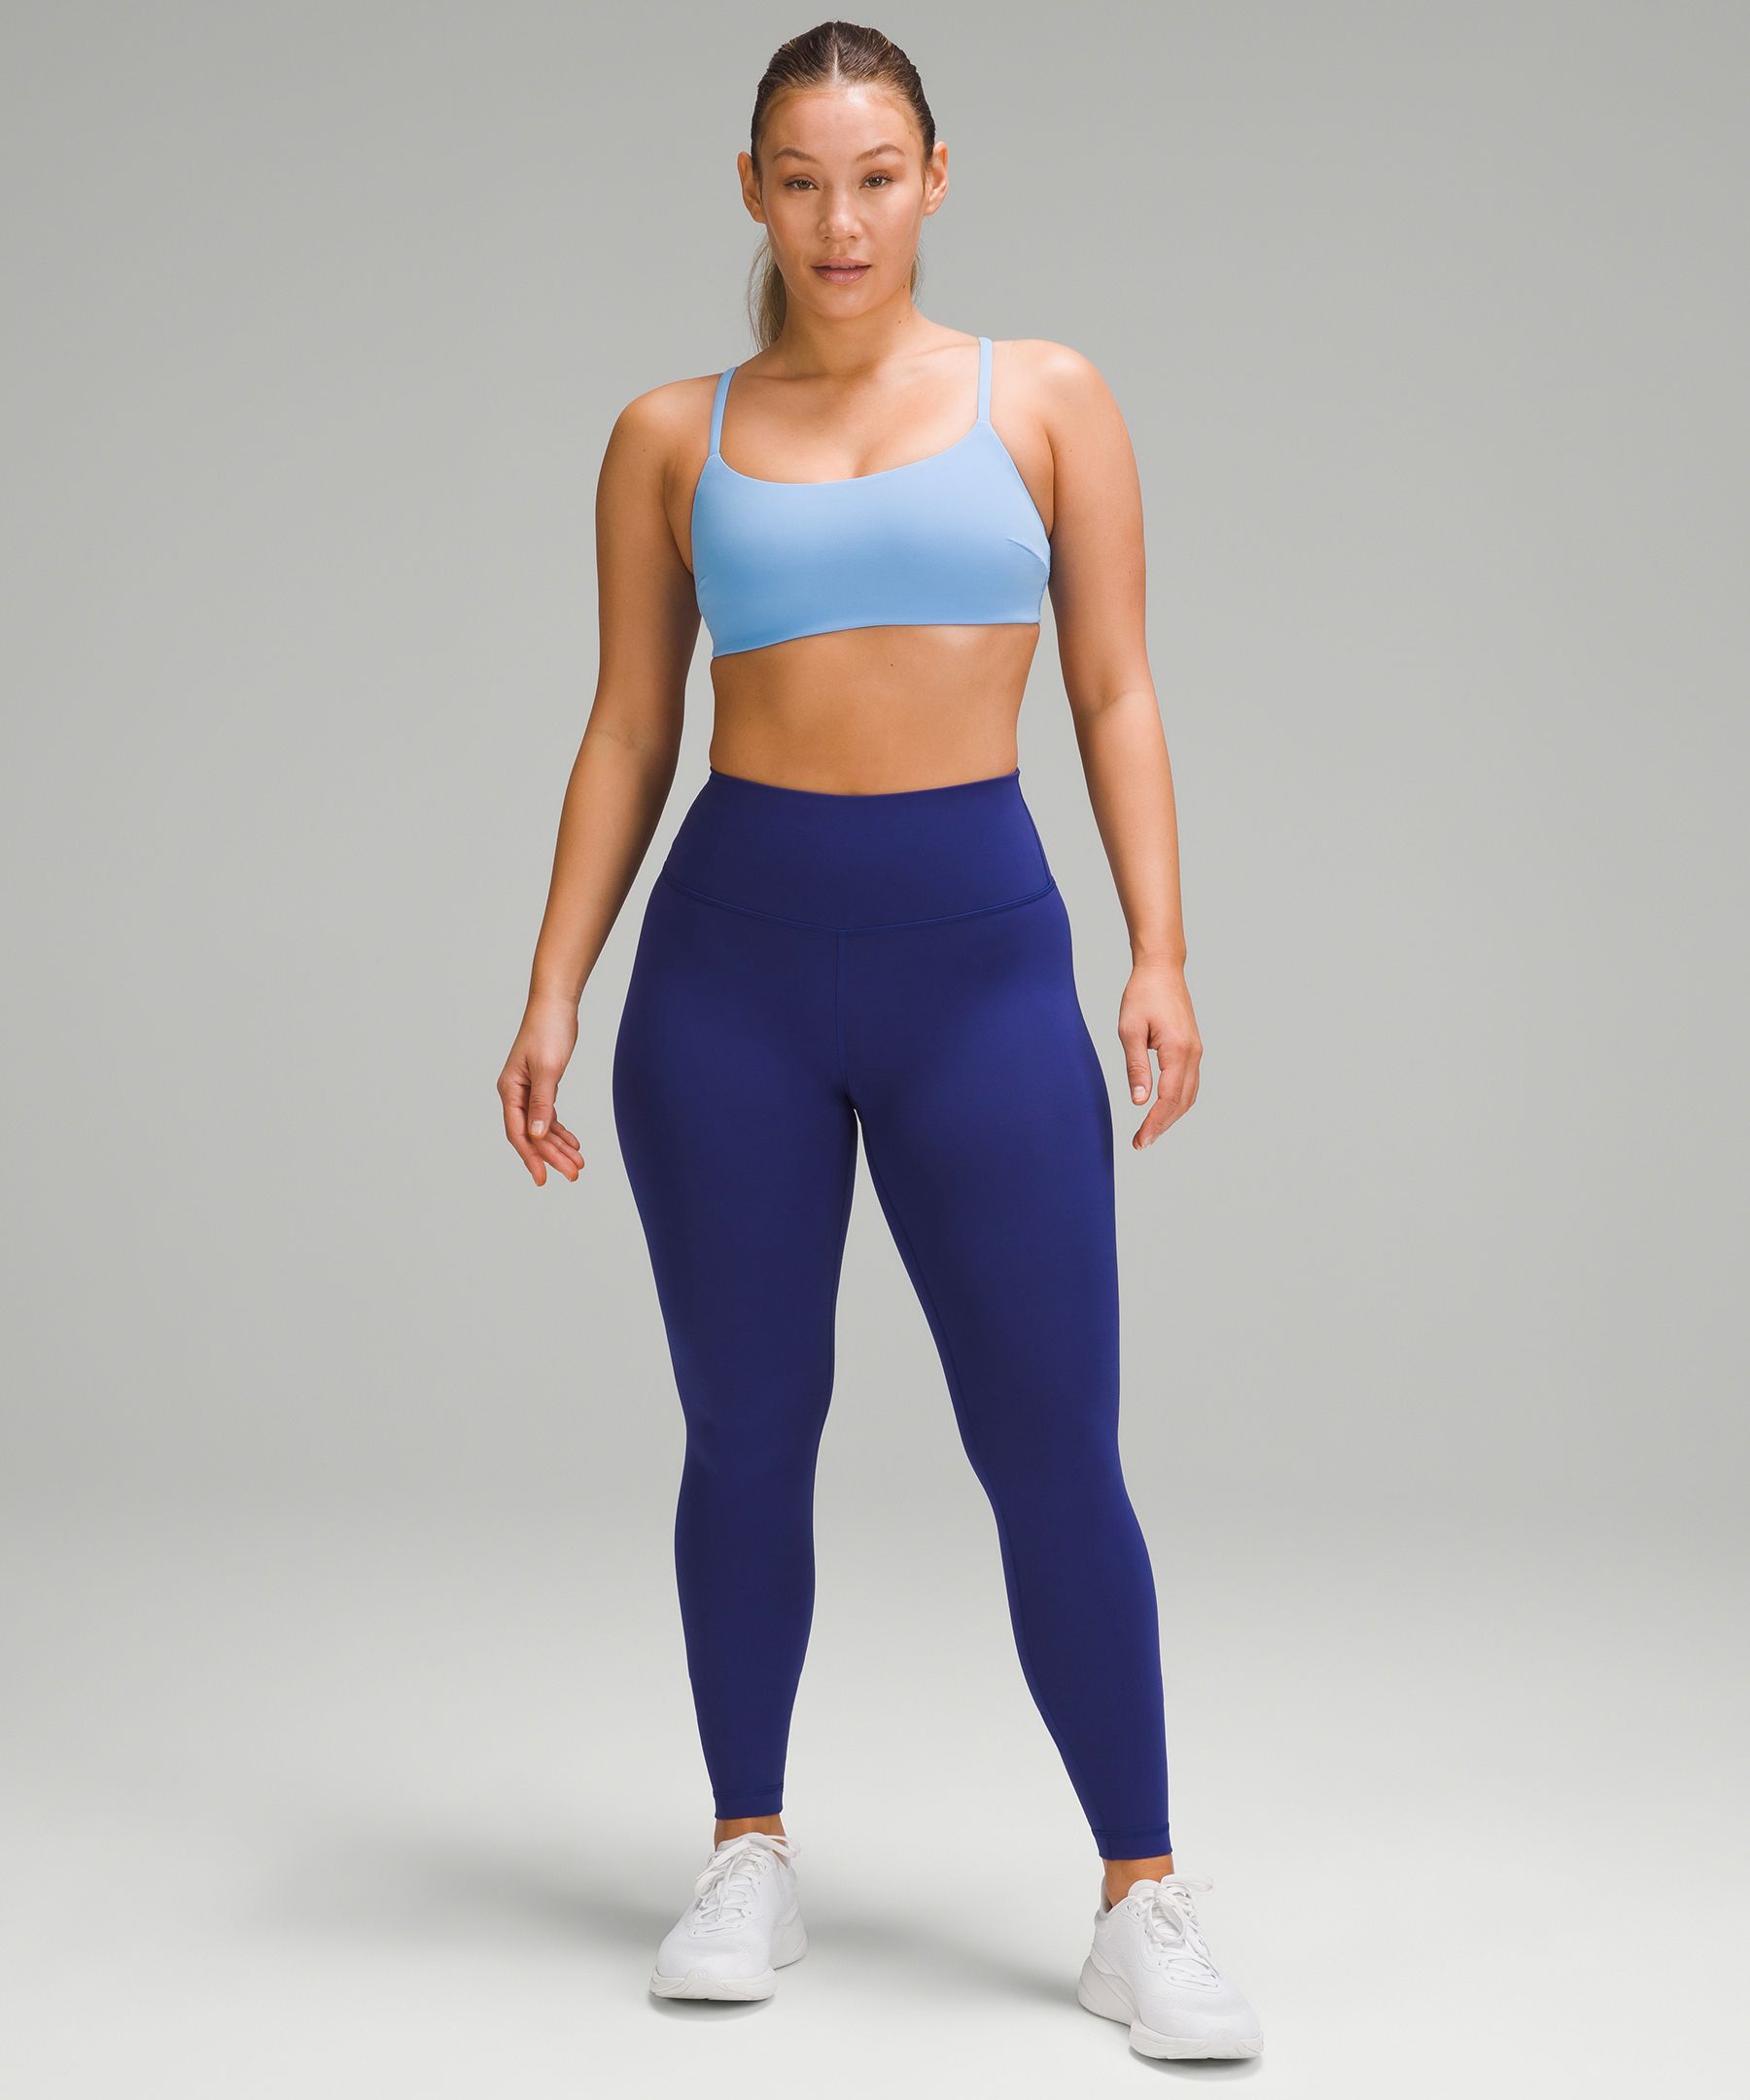 Buy Lululemon Women's Wunder Under Stretchy Fitness Pants - High